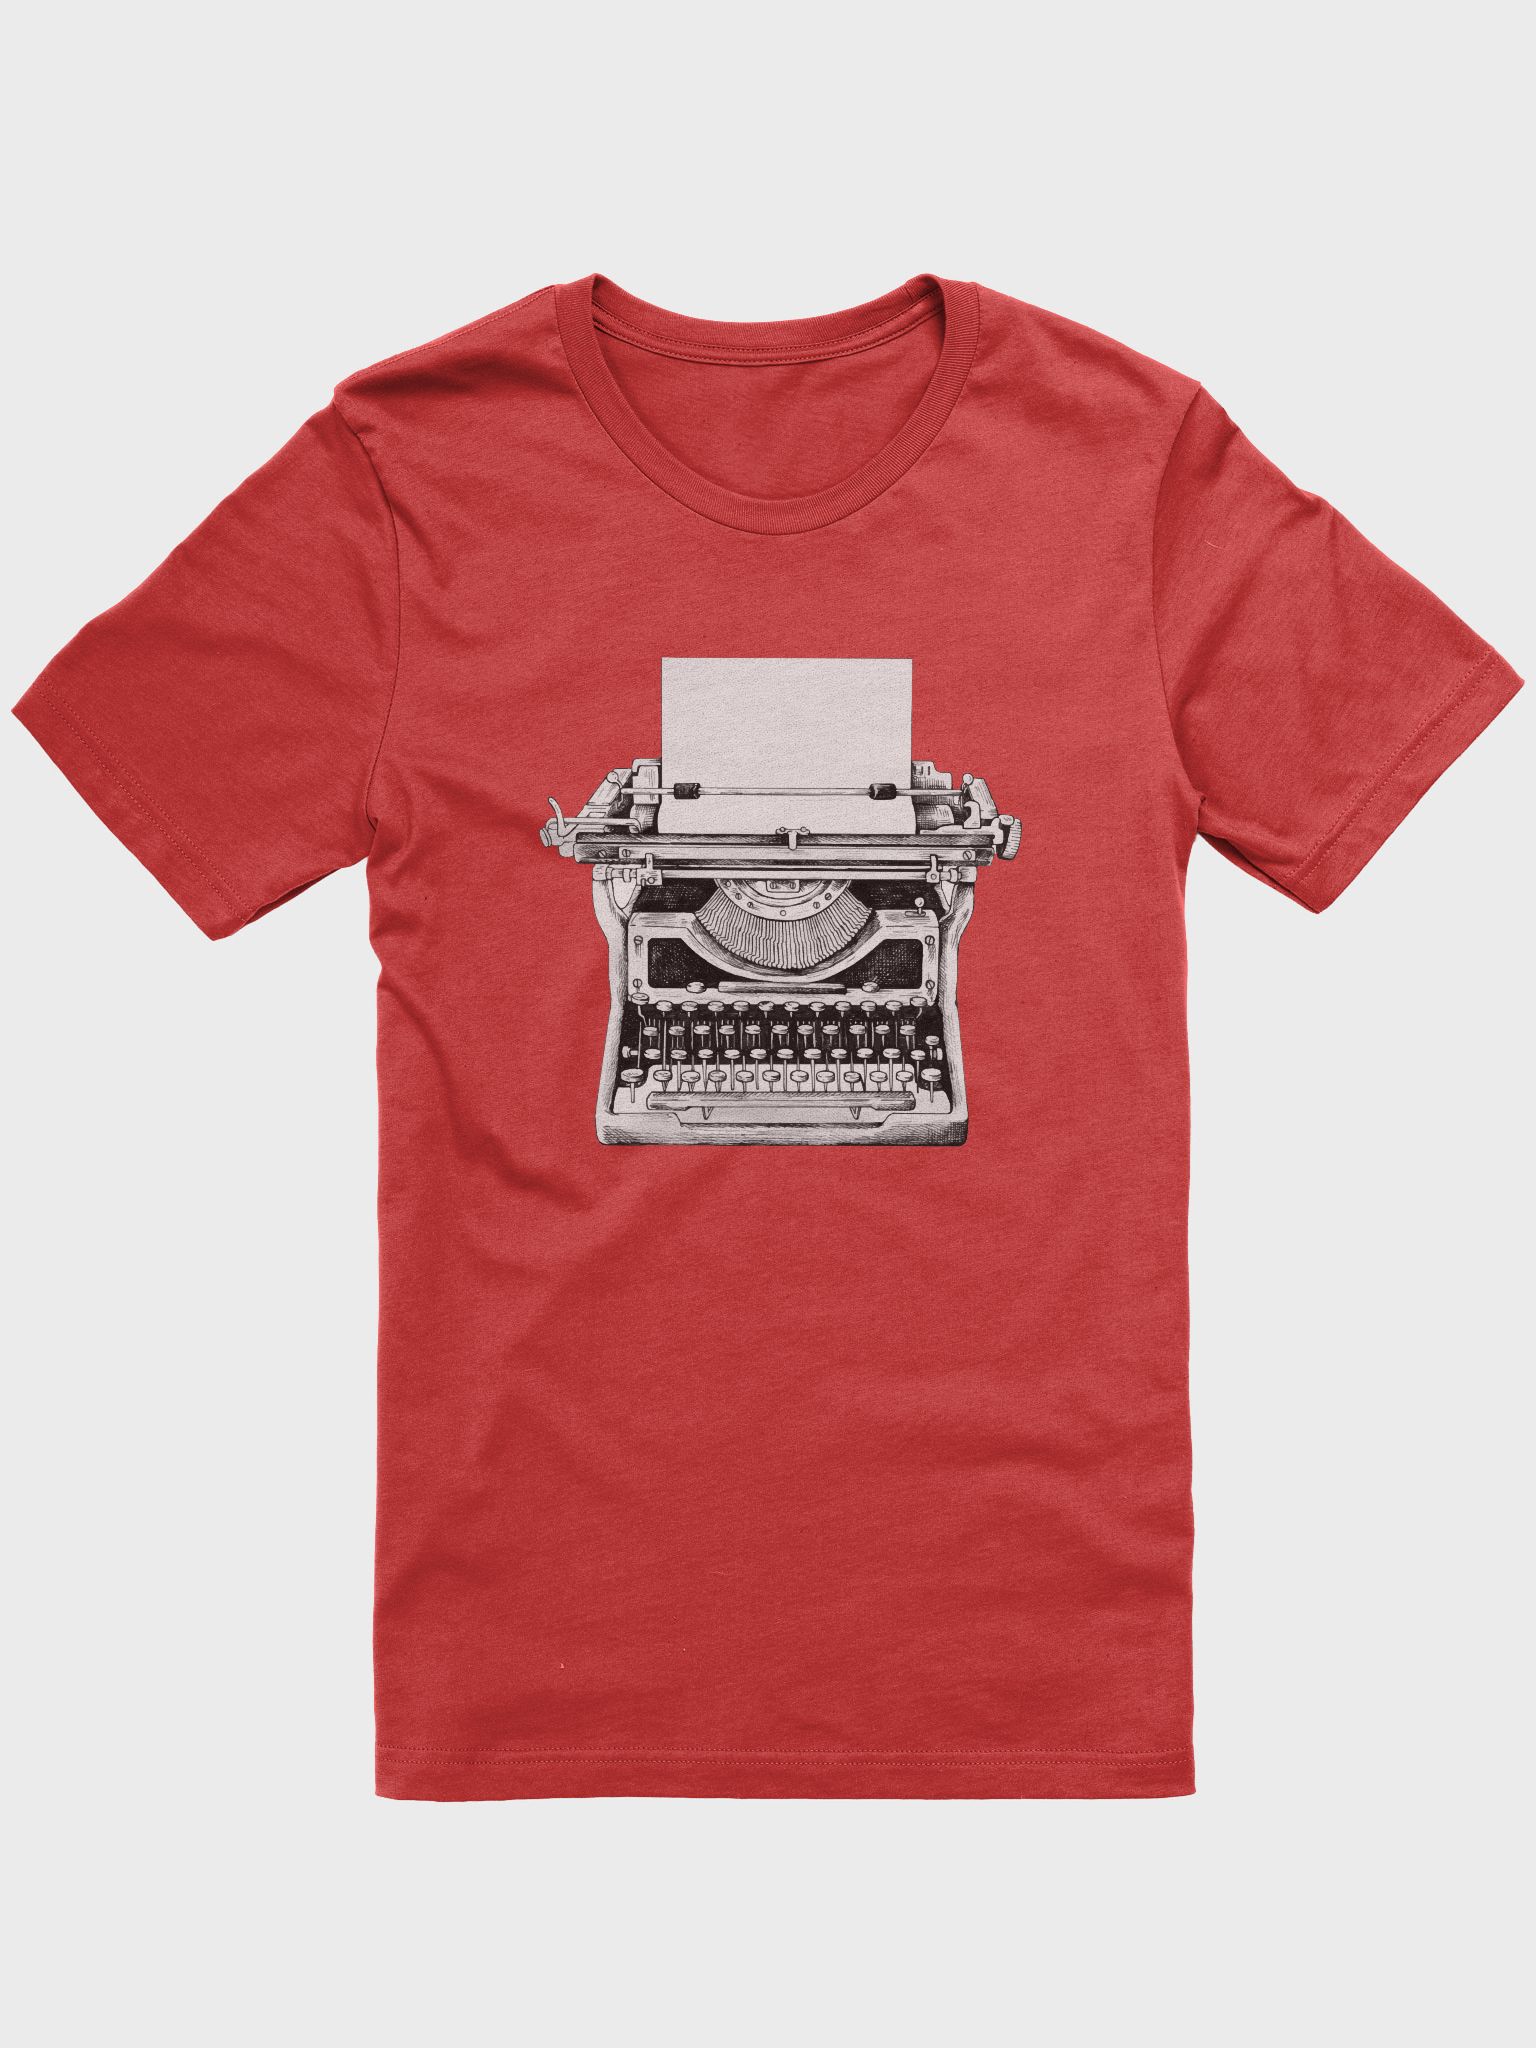 Vintage Typewriter Kids T-Shirt for Sale by PeterADesign